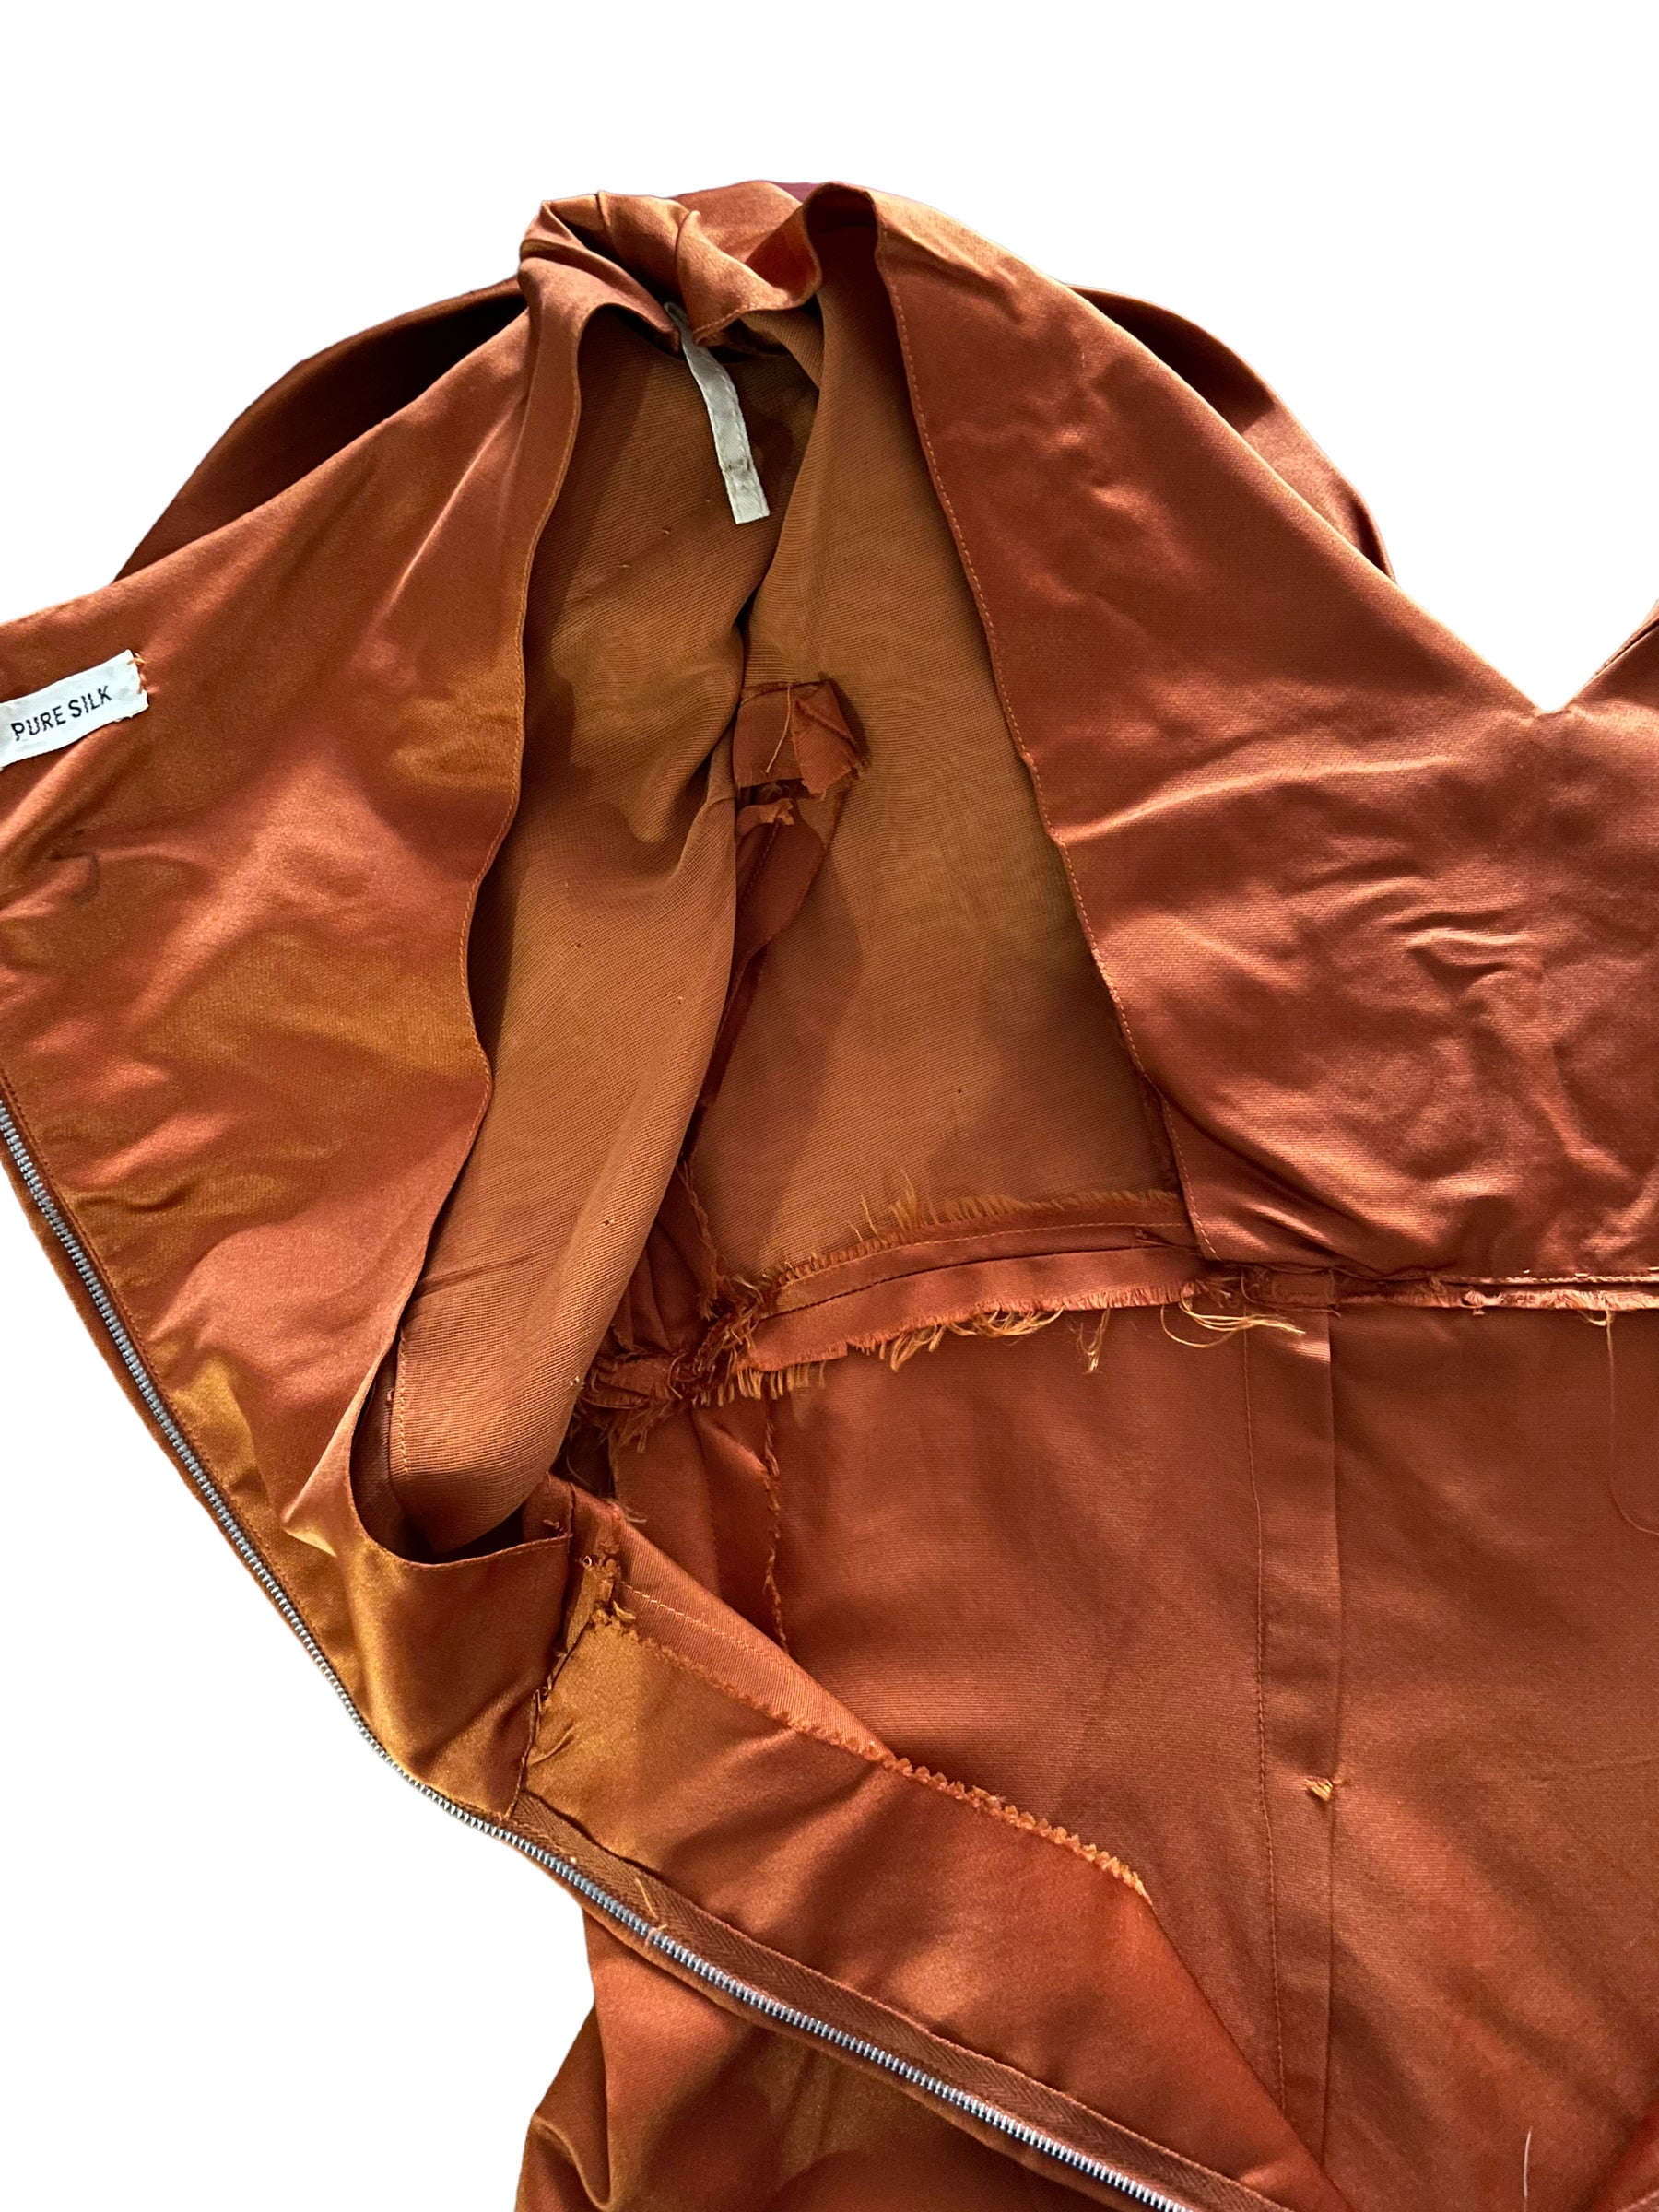 Inside view of Vintage 1950s Burnt Orange Silk Dress SZ M